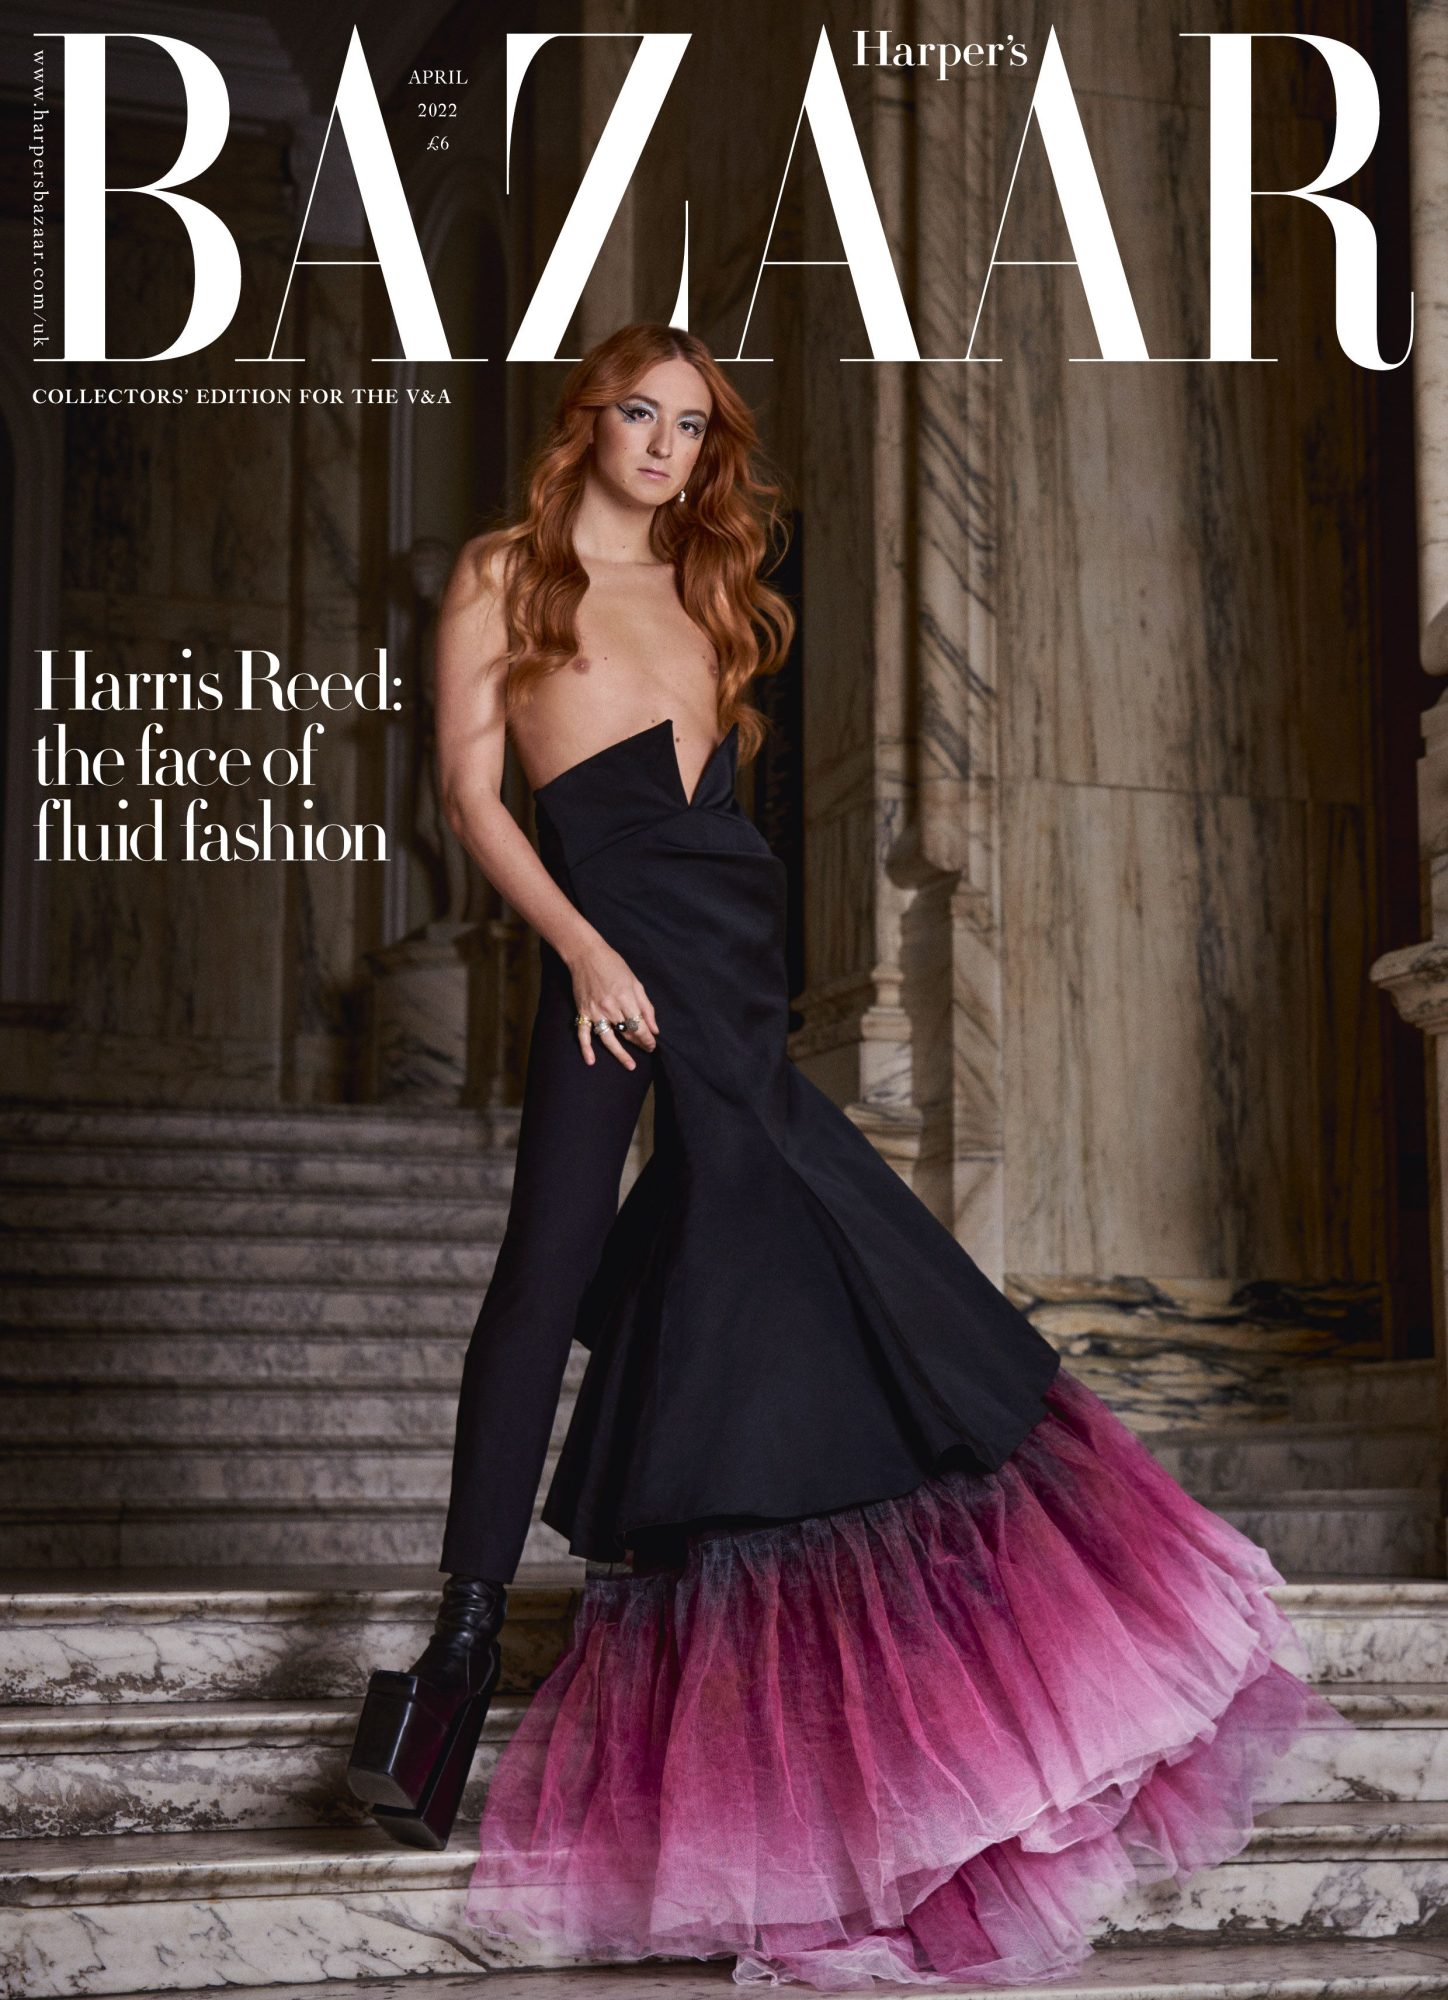 Harris Reed en couverture du magazine Harper's Bazaar